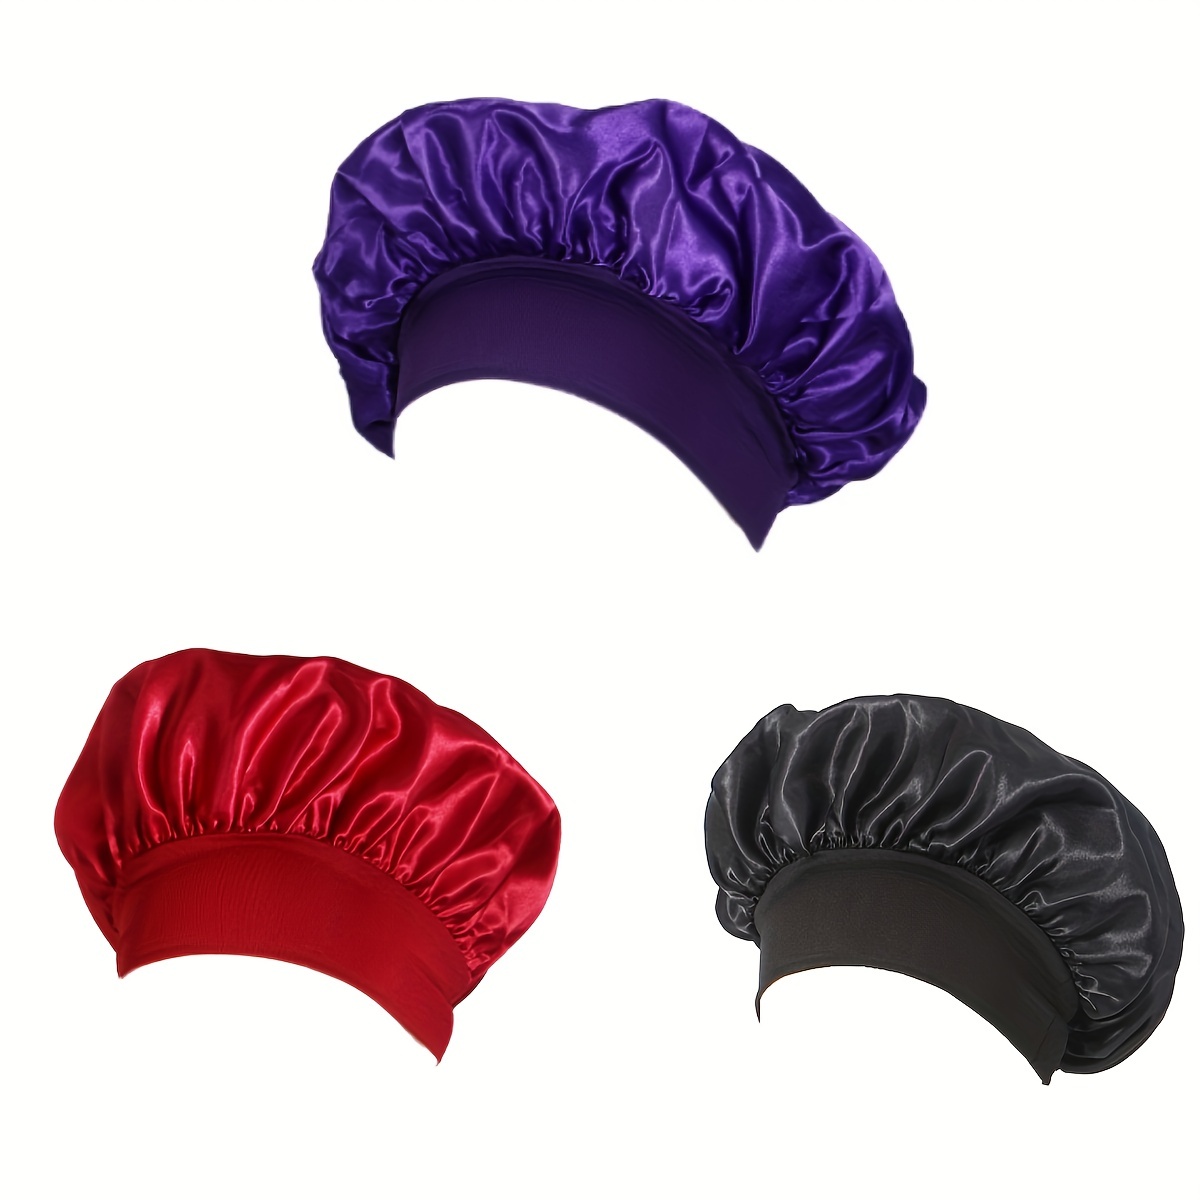 Satin Bonnet Night Cap / Hair Bonnet / Afro Night Cap for Sleeping